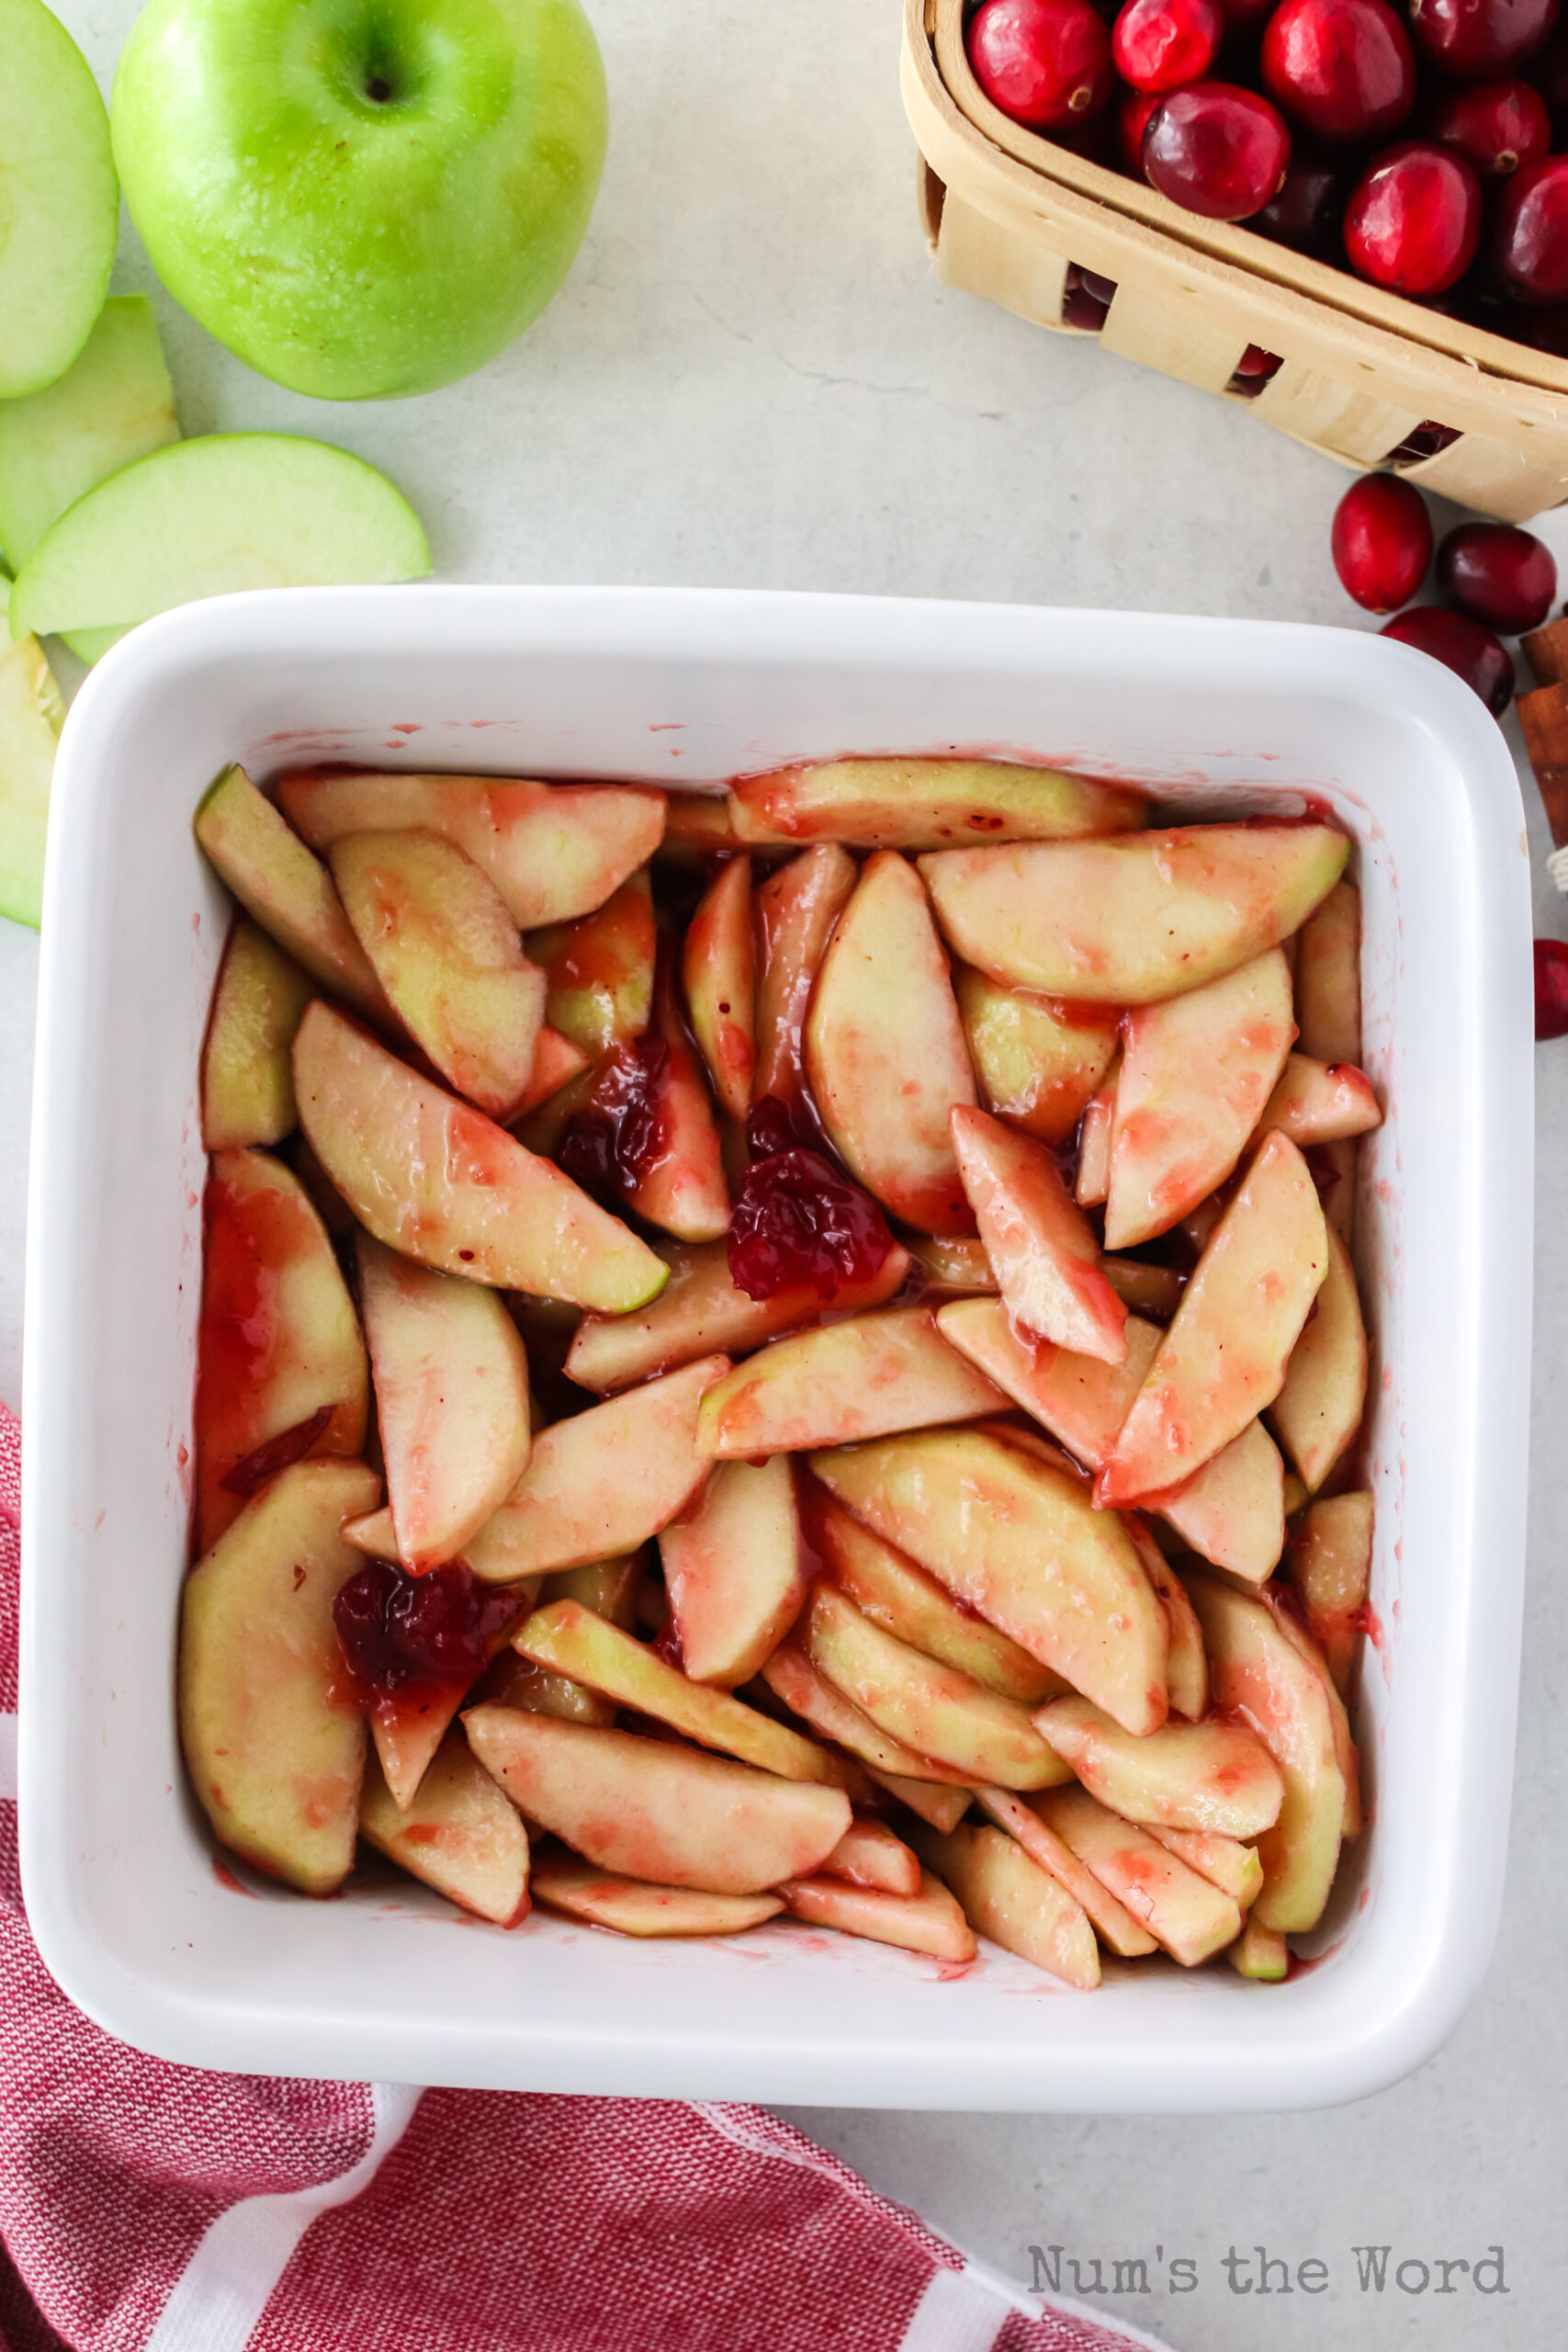 Apple cranberry mixture in casserole dish.